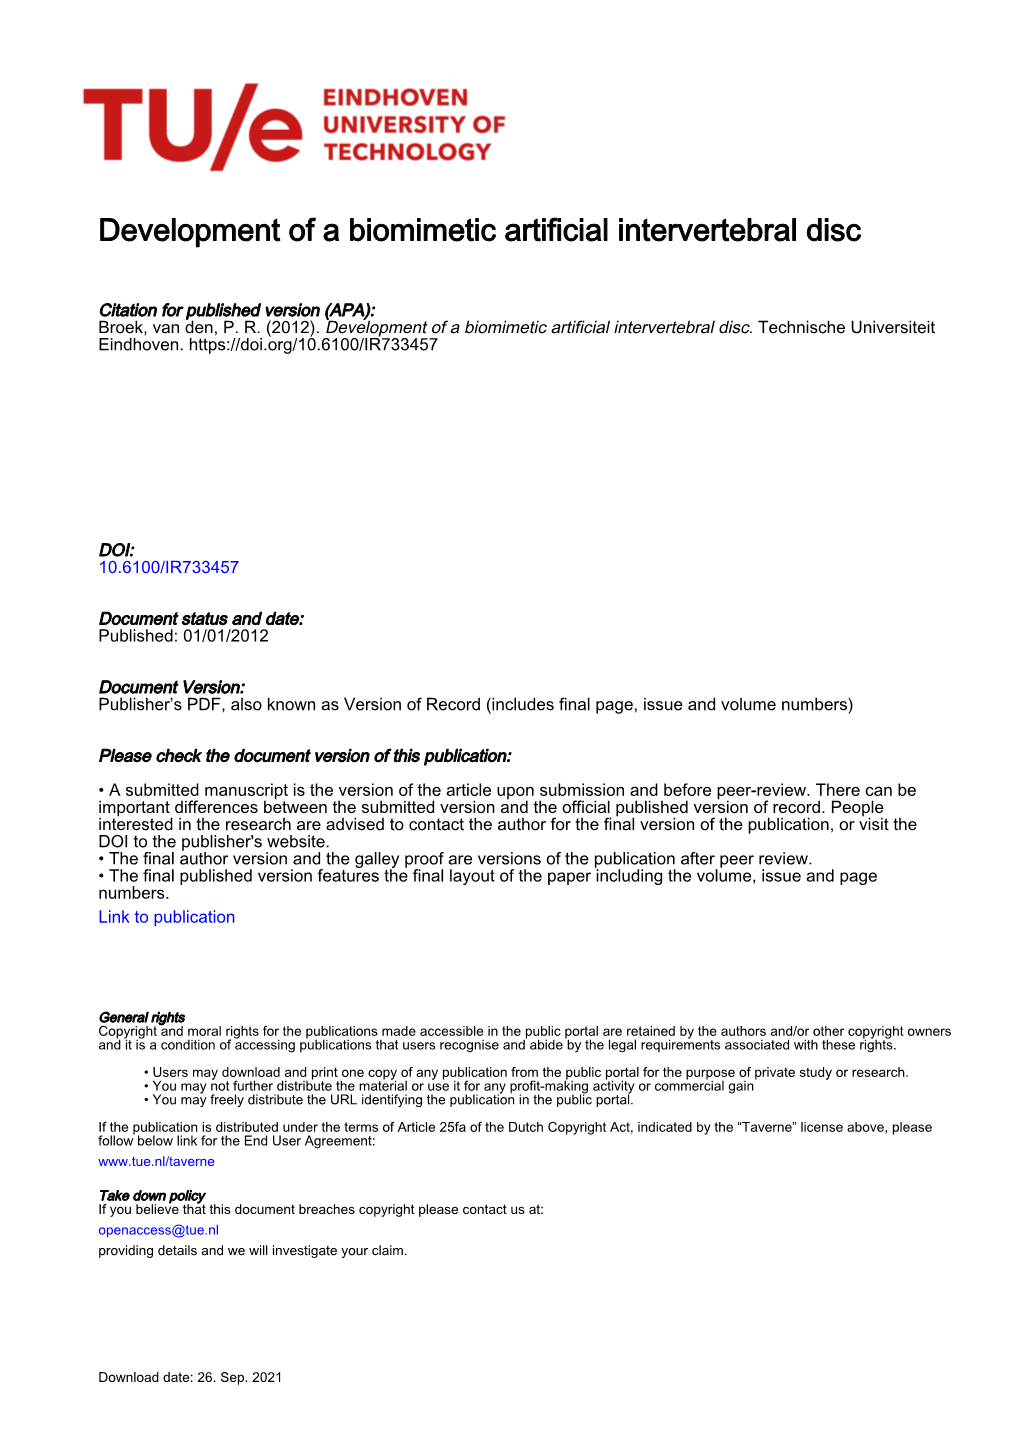 Development of a Biomimetic Artificial Intervertebral Disc